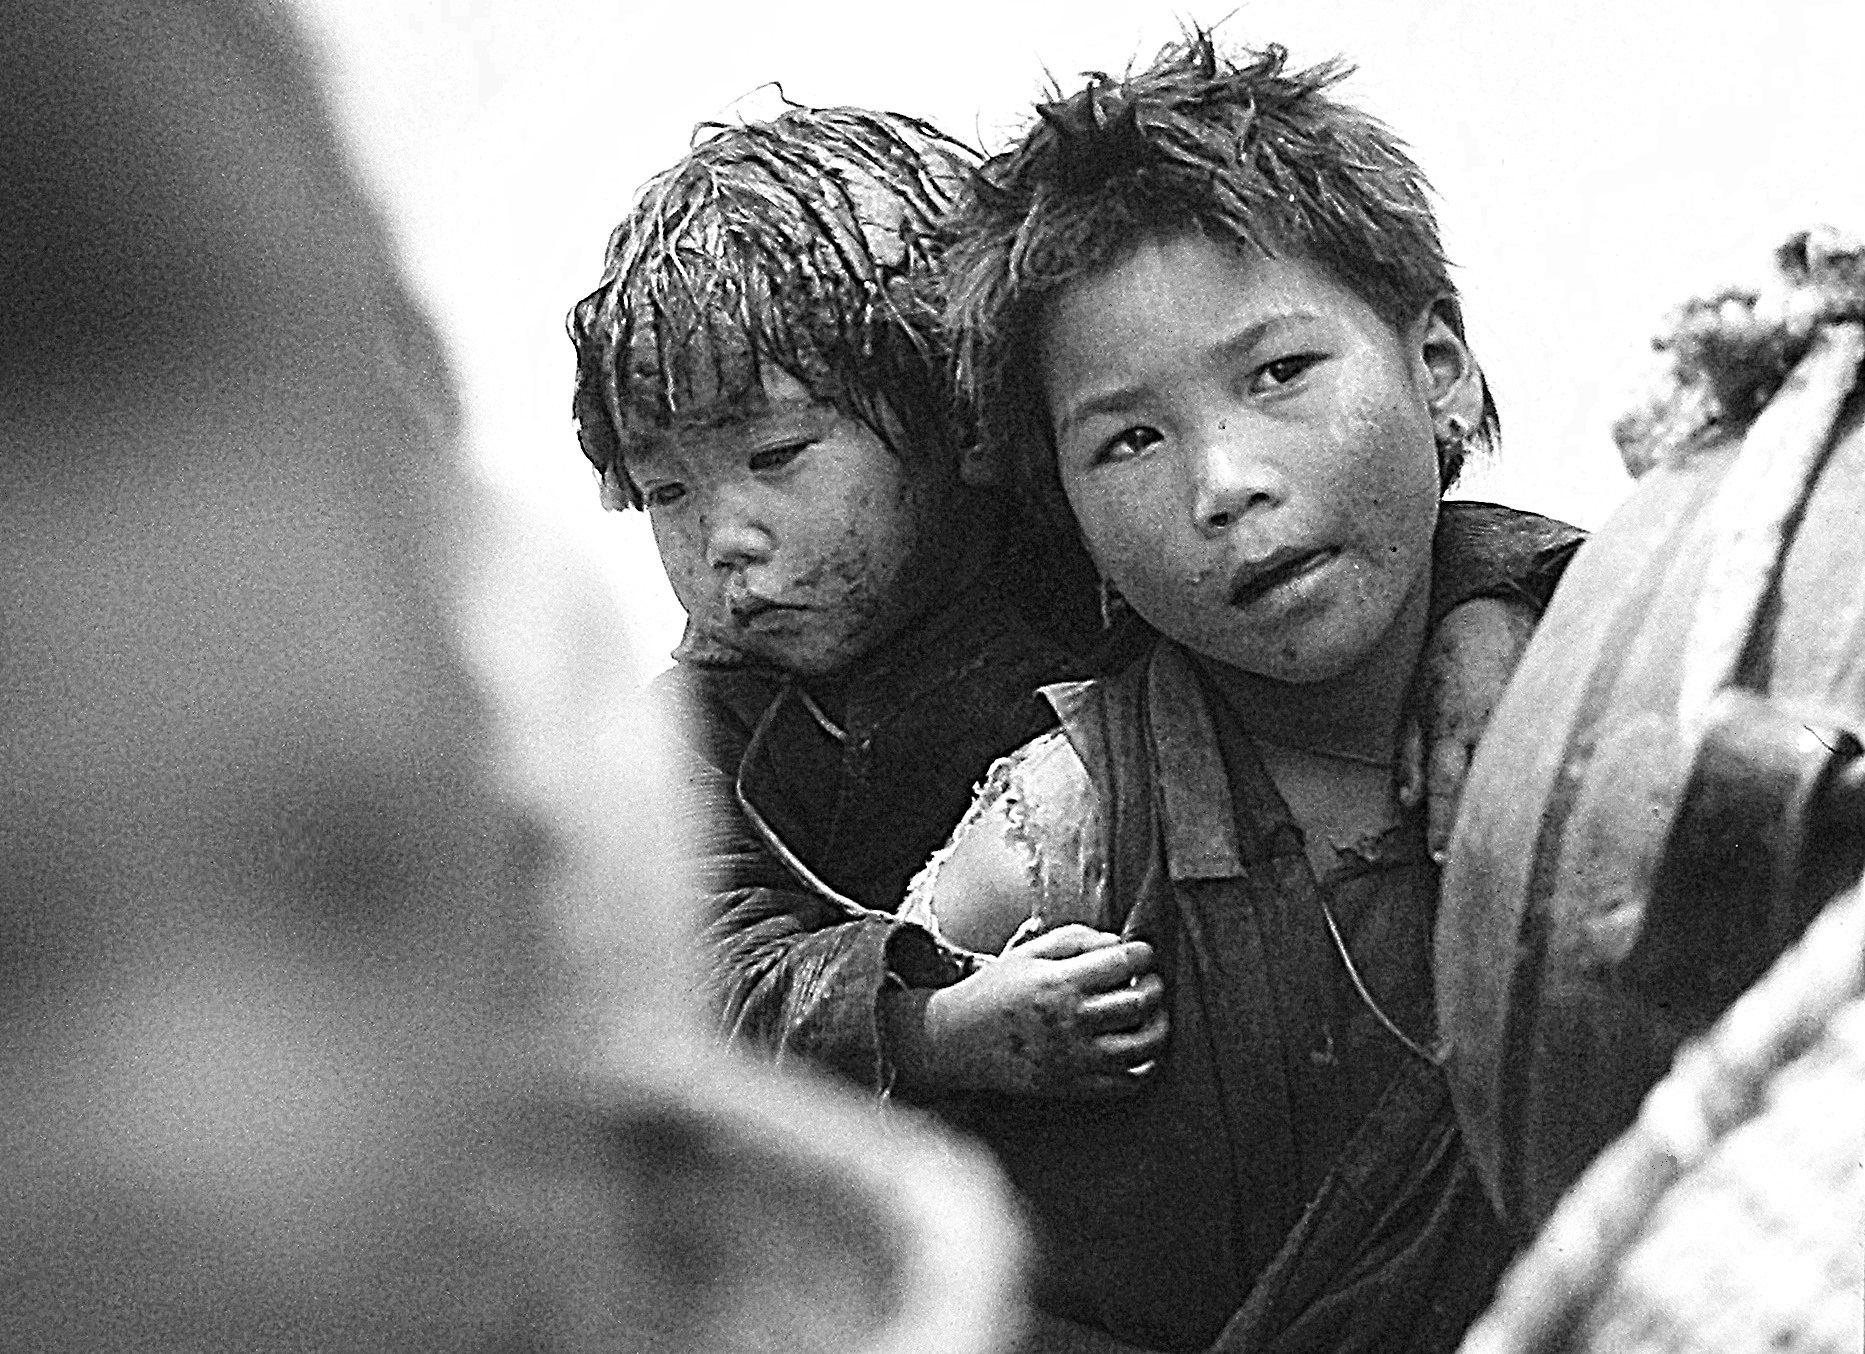 Infanzia difficile - Tibet...